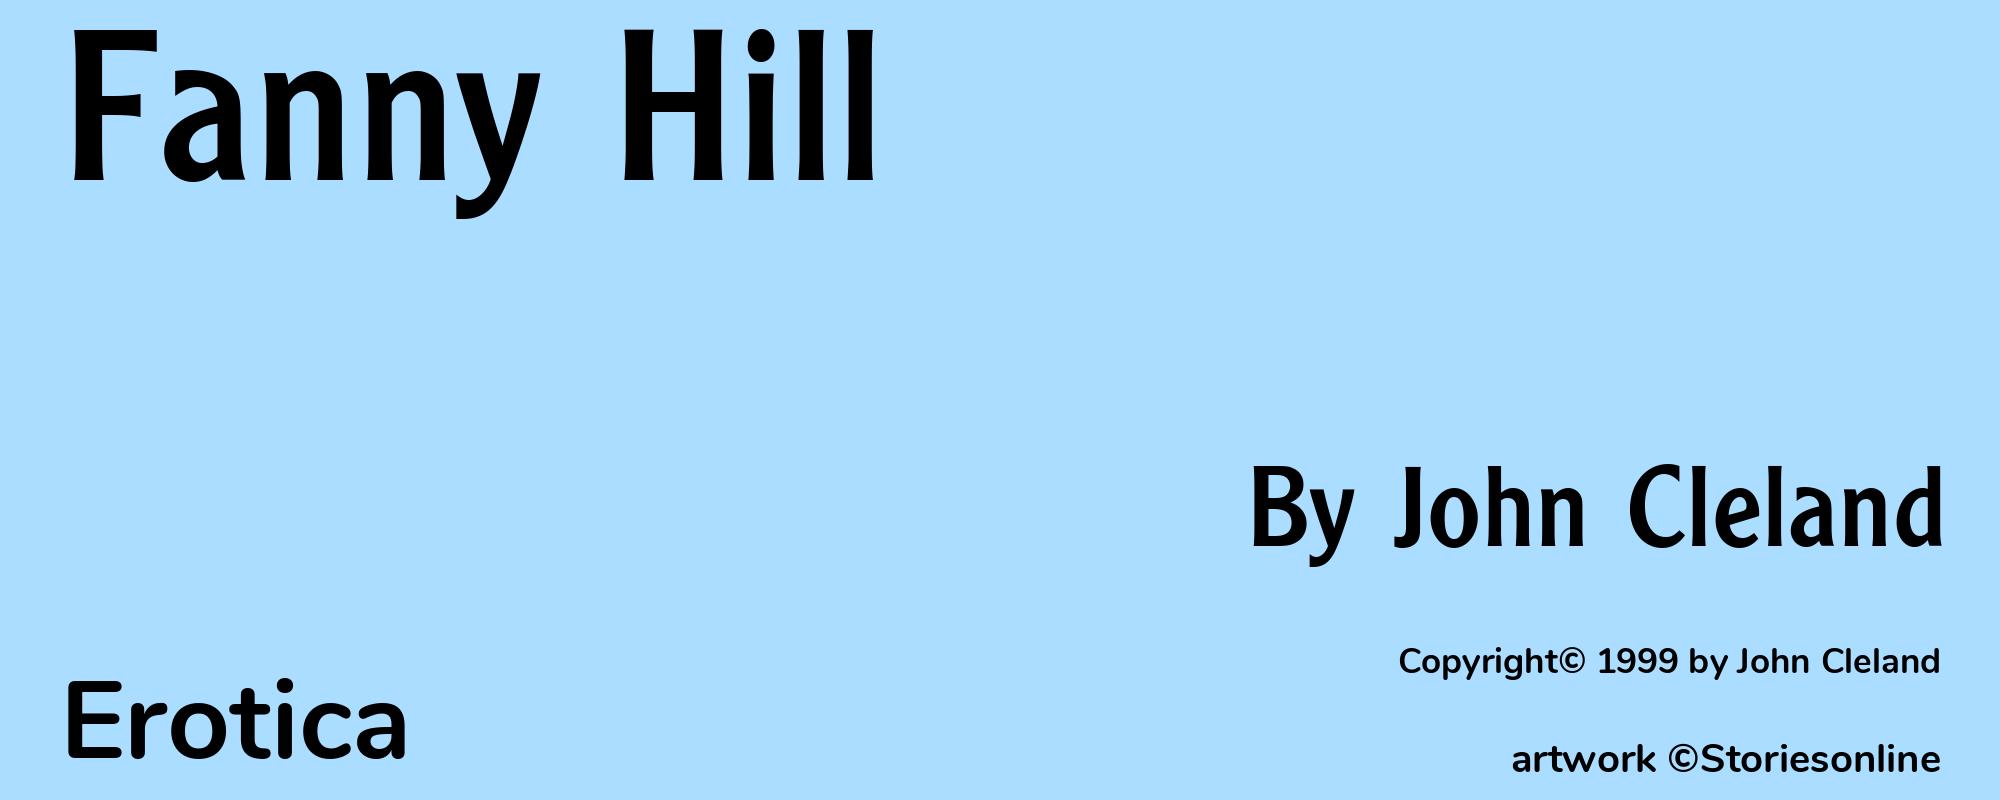 Fanny Hill - Cover